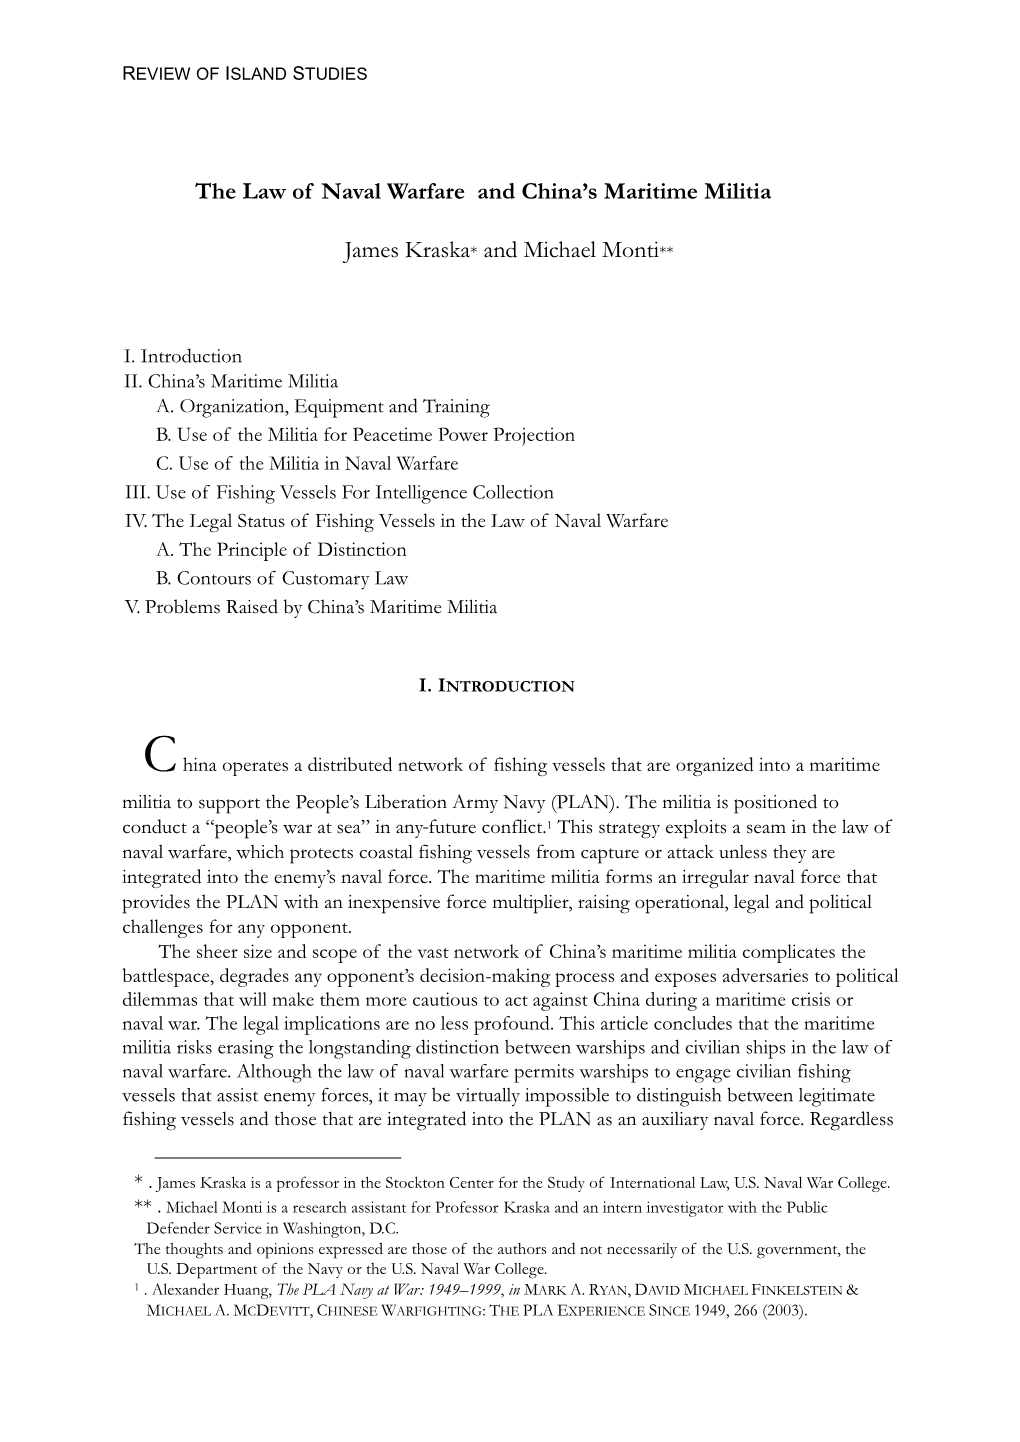 The Law of Naval Warfare and China's Maritime Militia James Kraska* and Michael Monti**